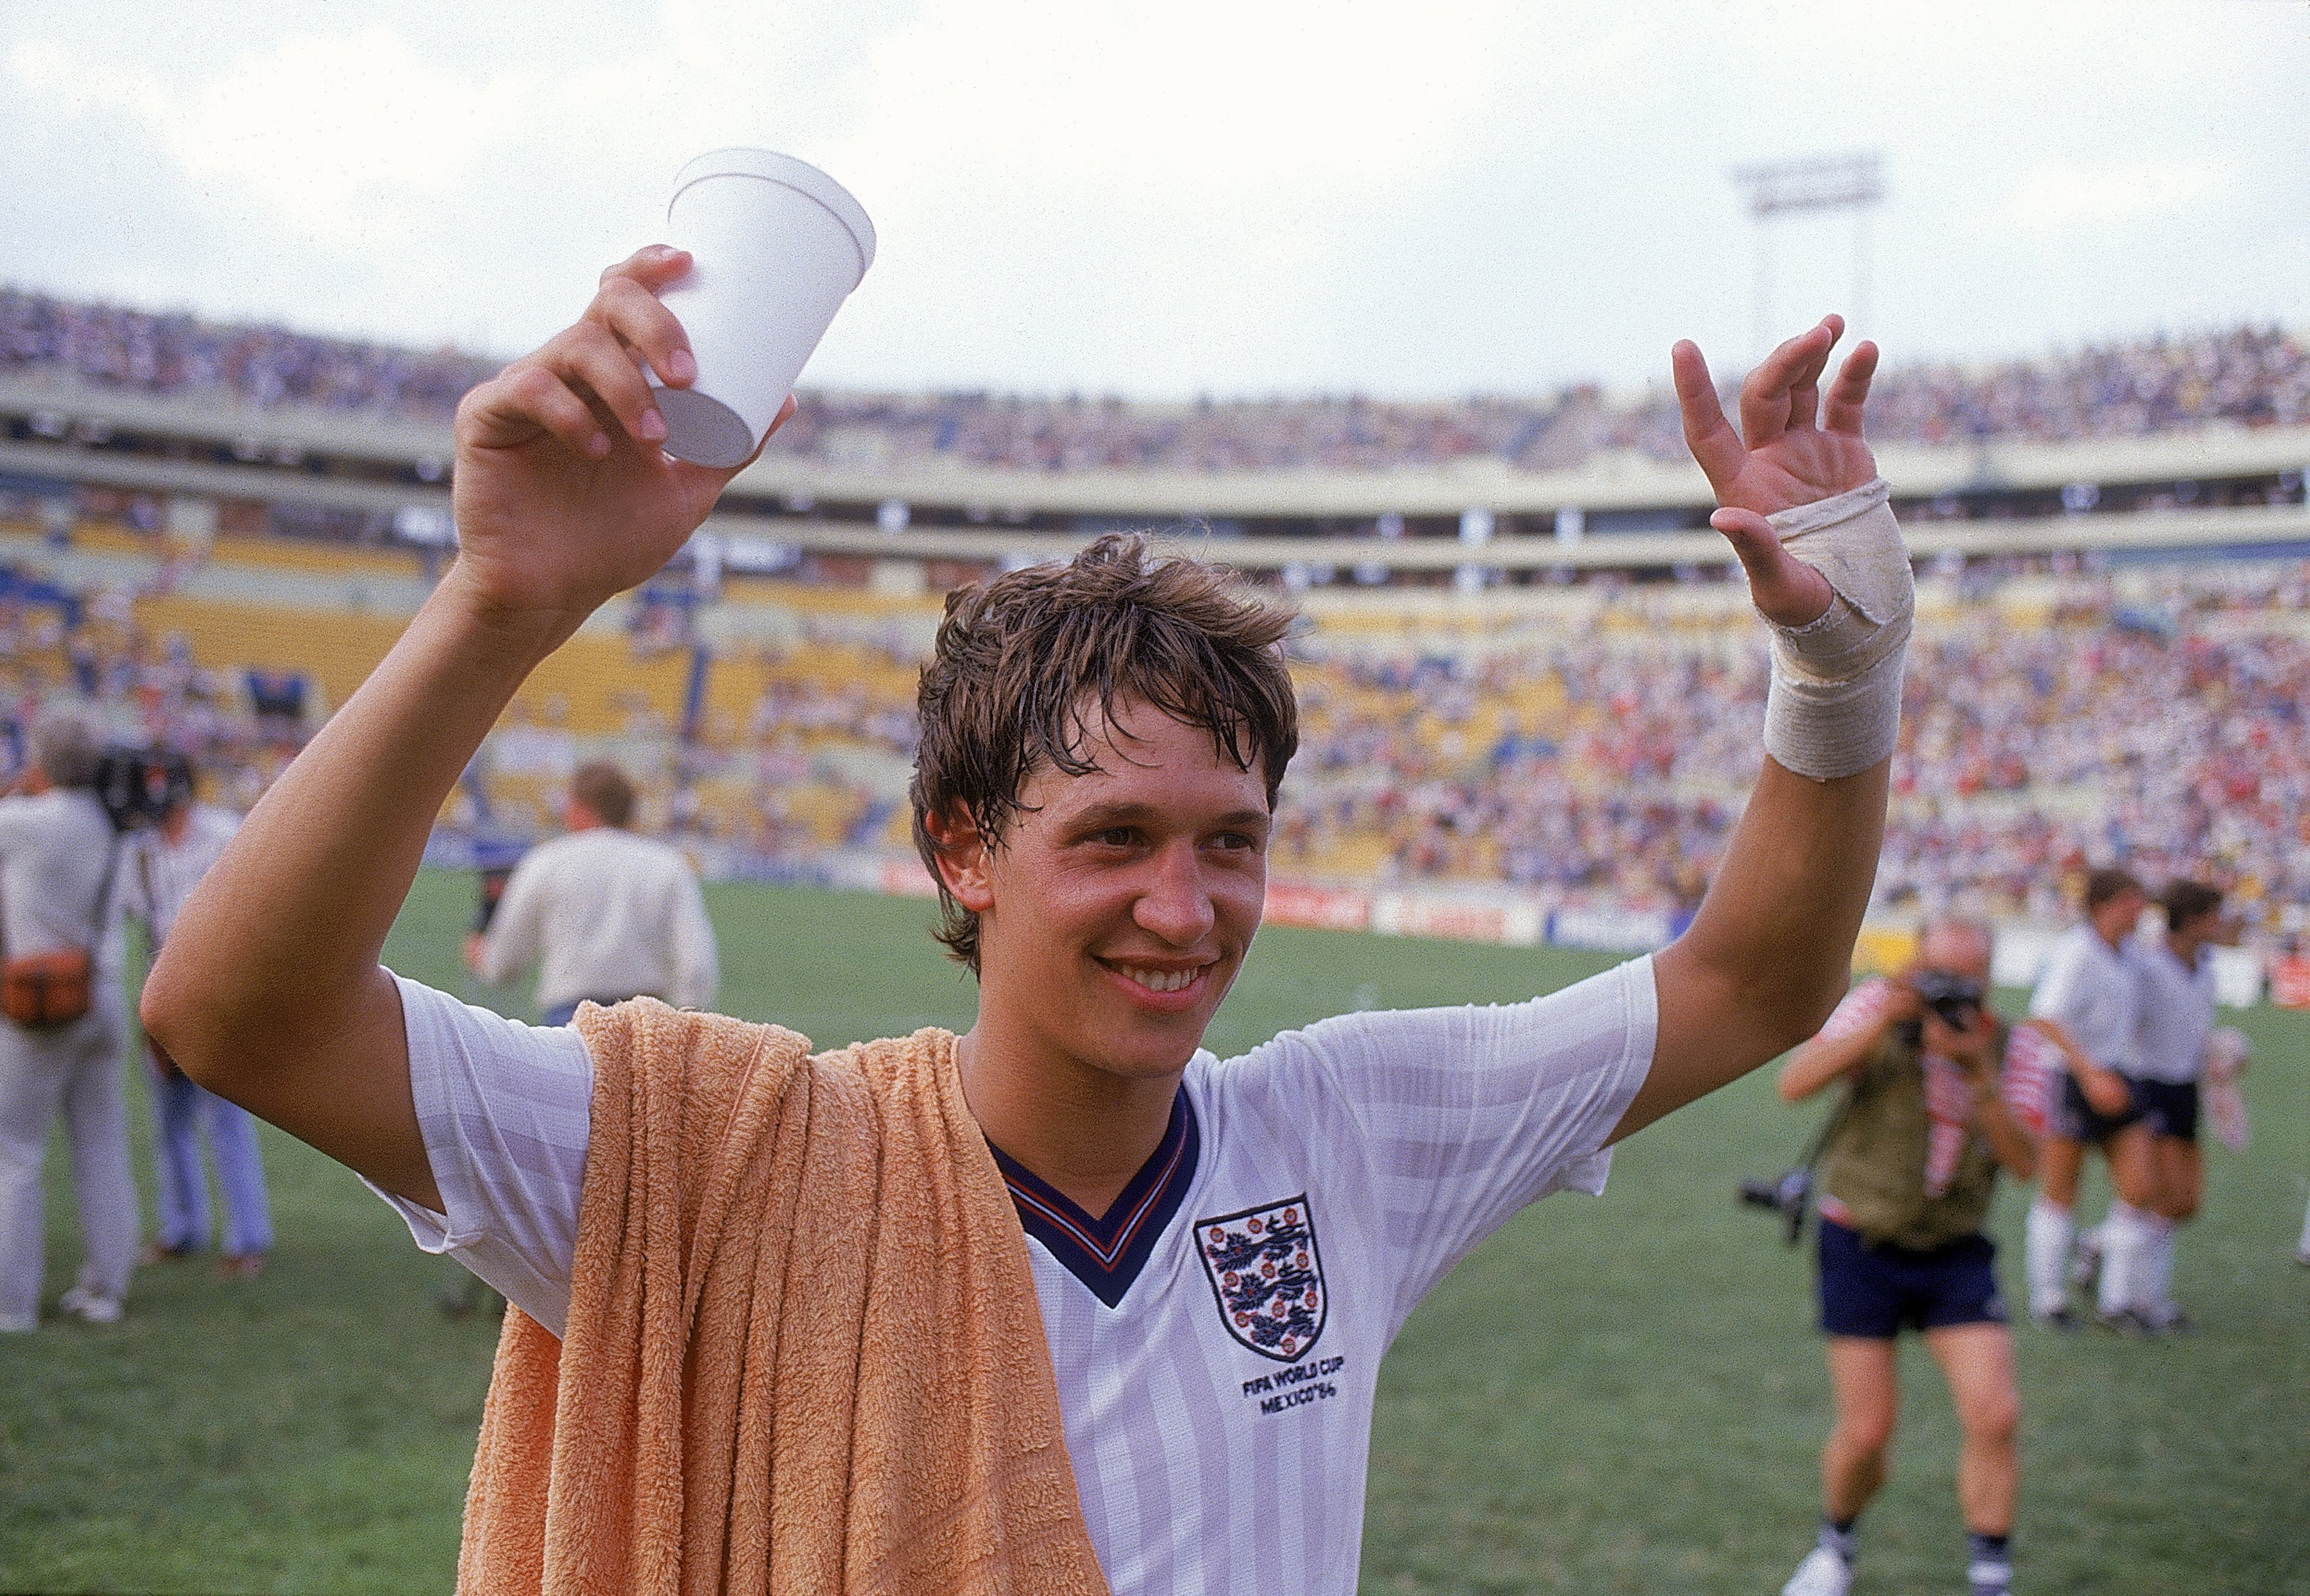 Gary Lineker was England's top goalscorer during the 1986 World Cup